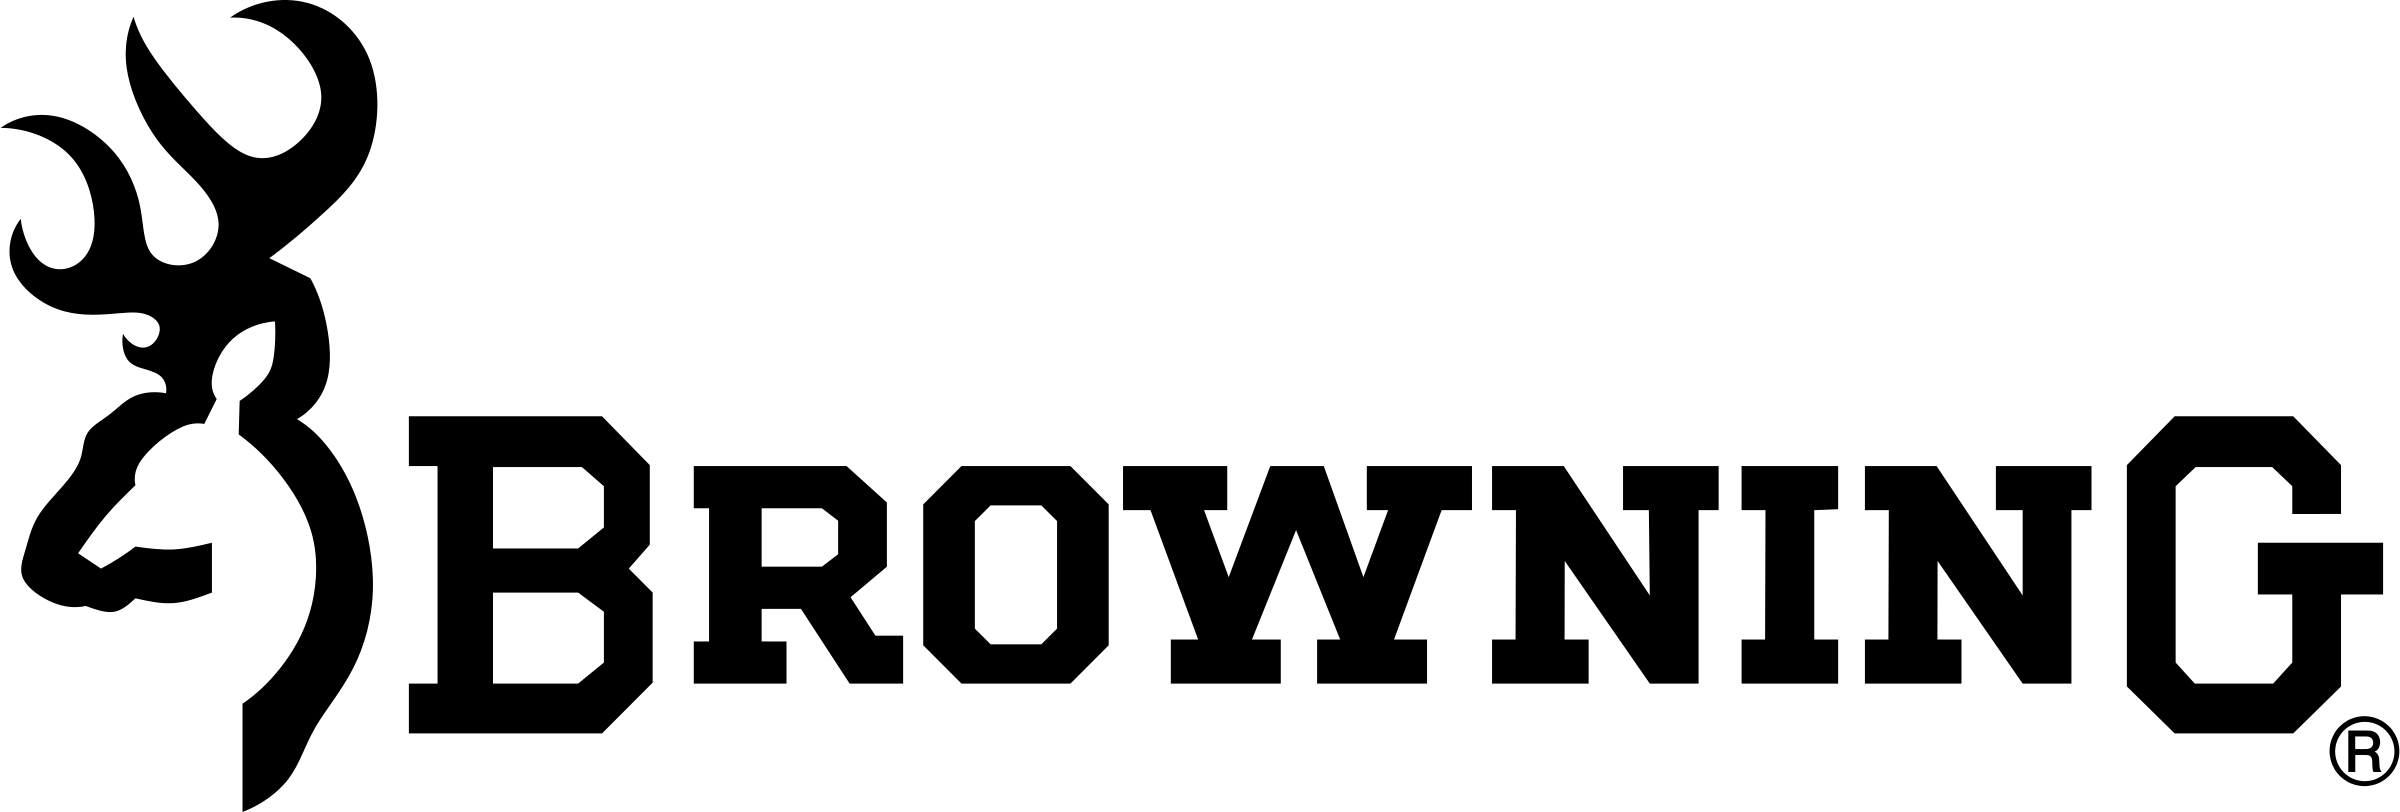 White Browning Logo - Browning Logo PNG Transparent & SVG Vector - Freebie Supply